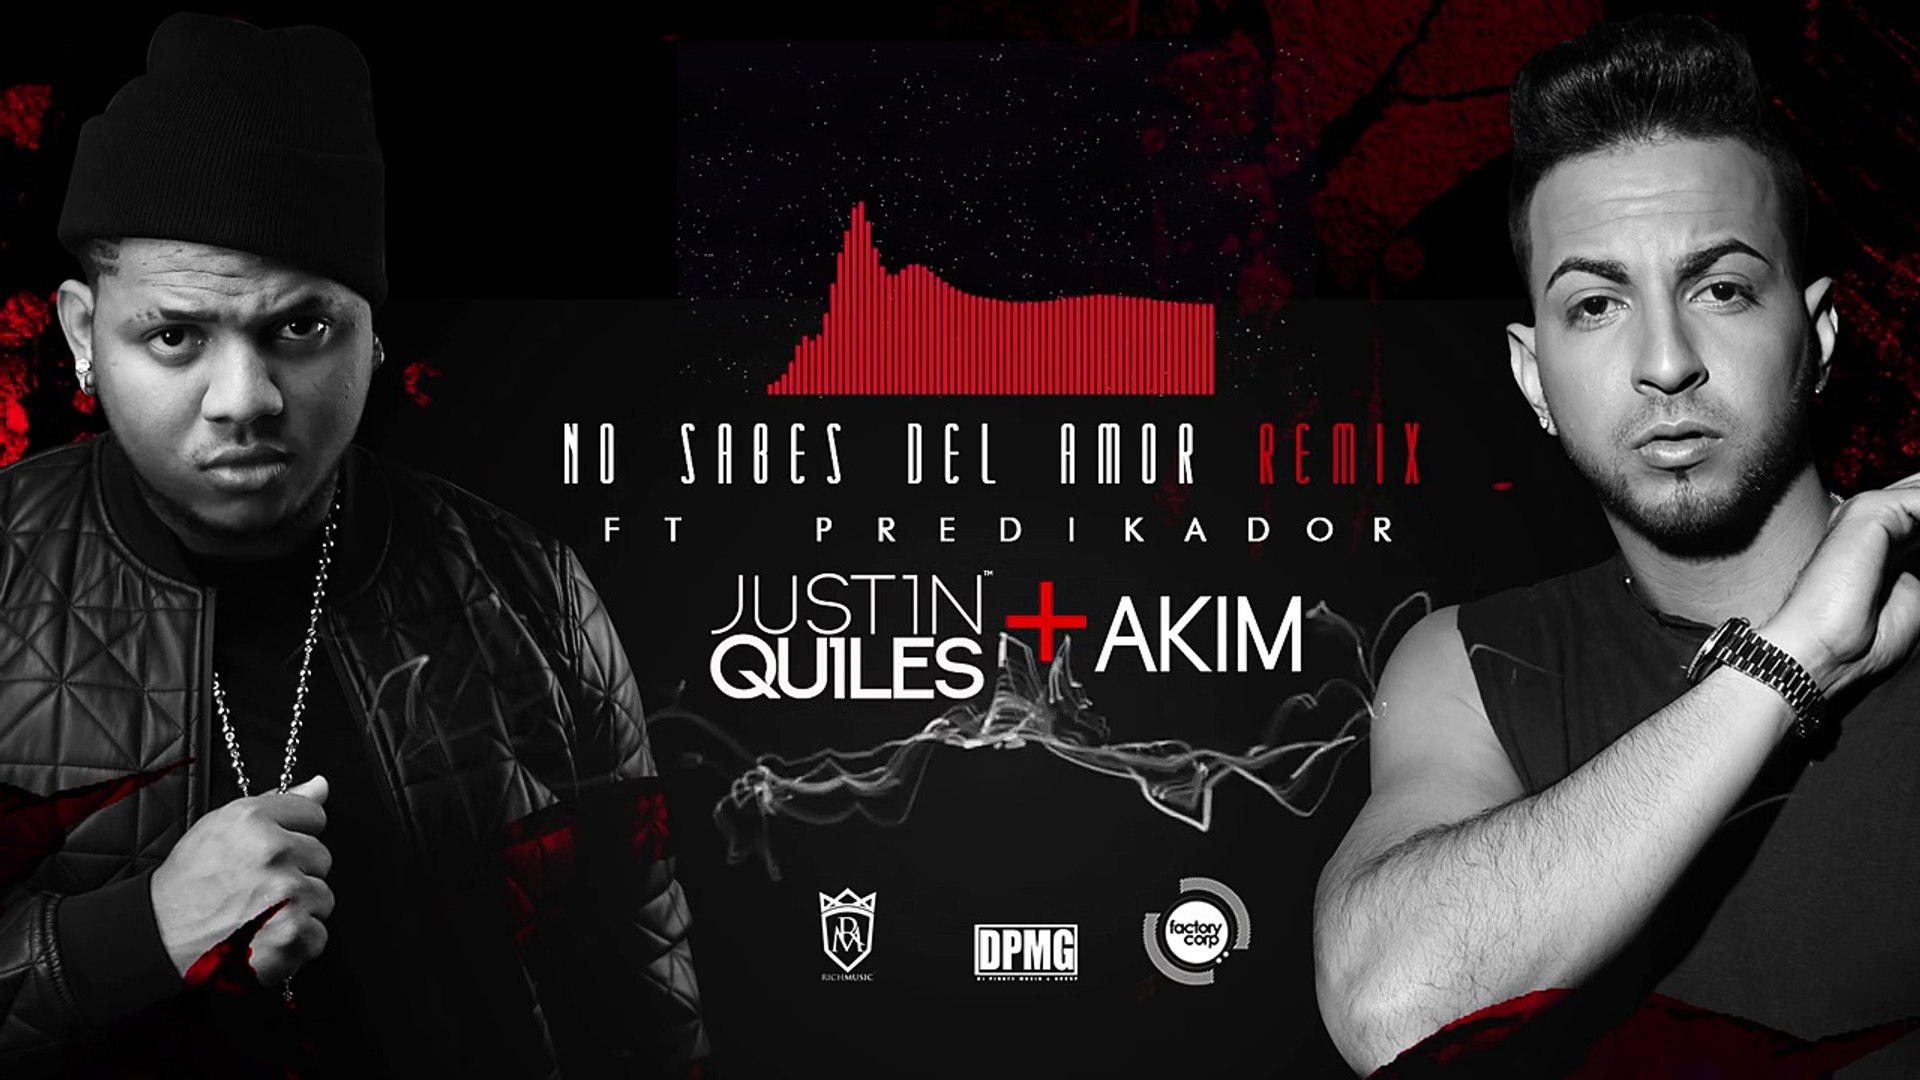 ⁣Justin Quiles and Akim ft. Predikador - No Sabes Del Amor (remix)